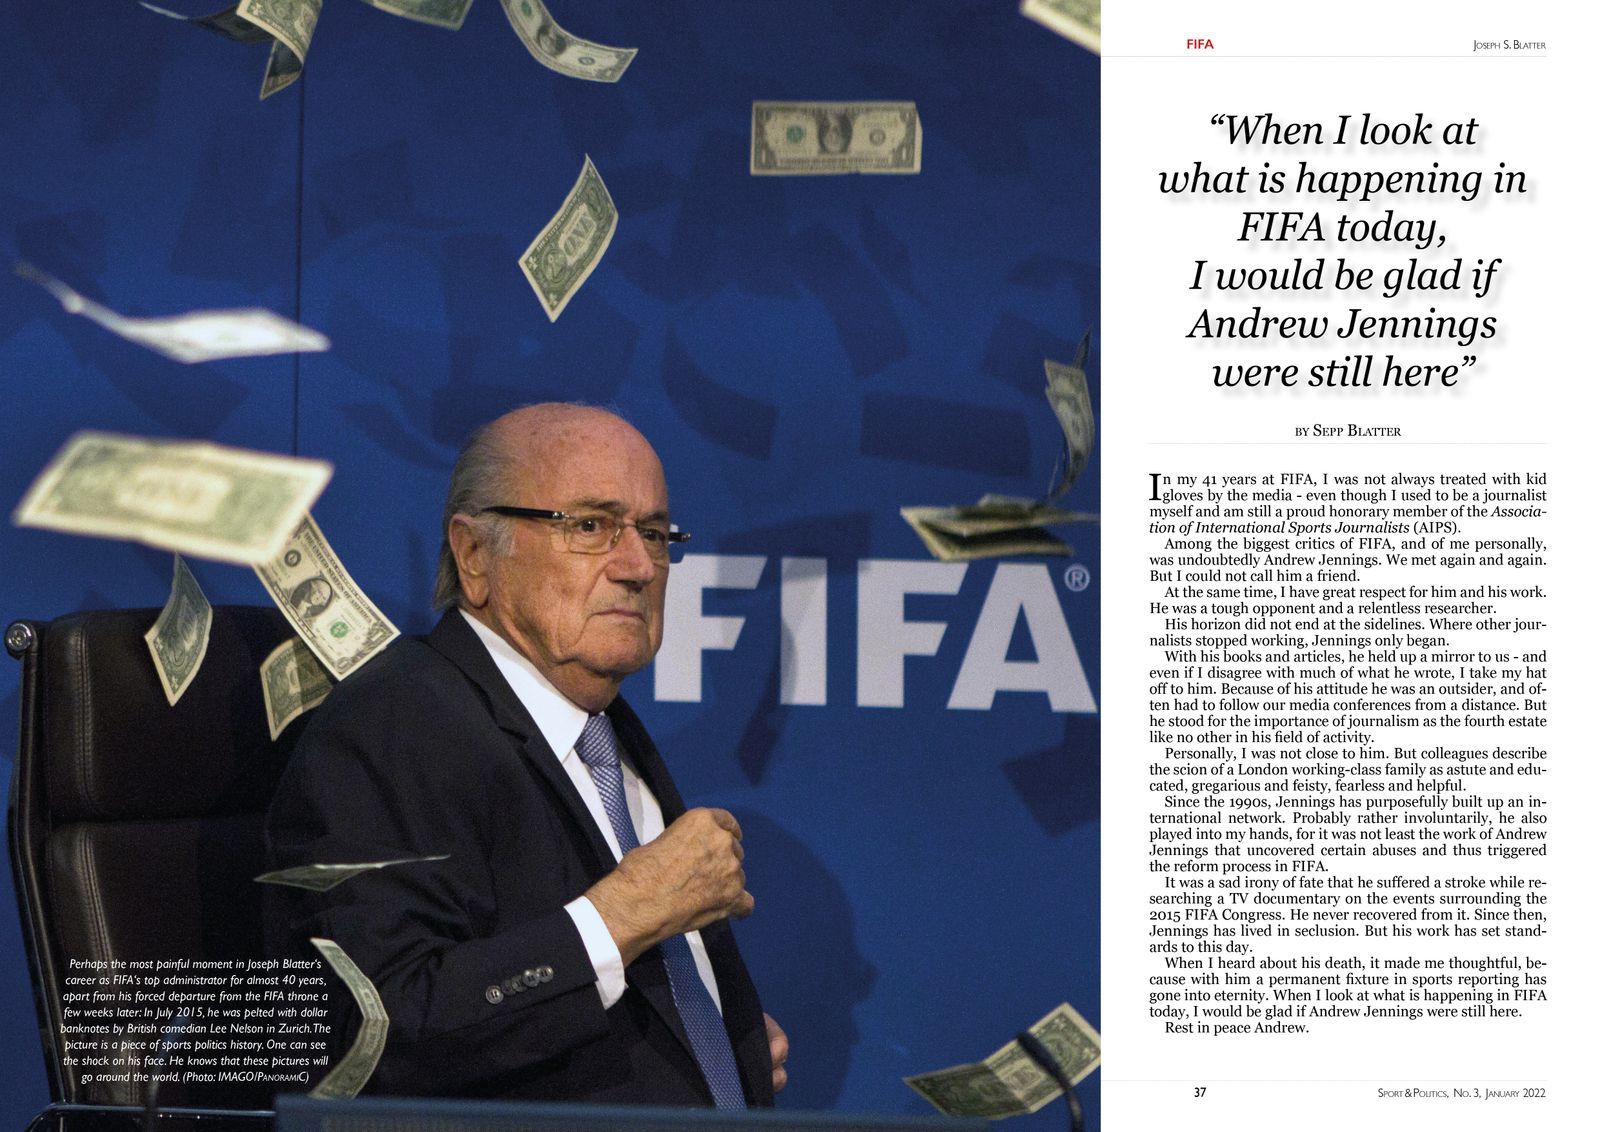 Sepp Blatter's contribution to the Andrew Jennings magazine